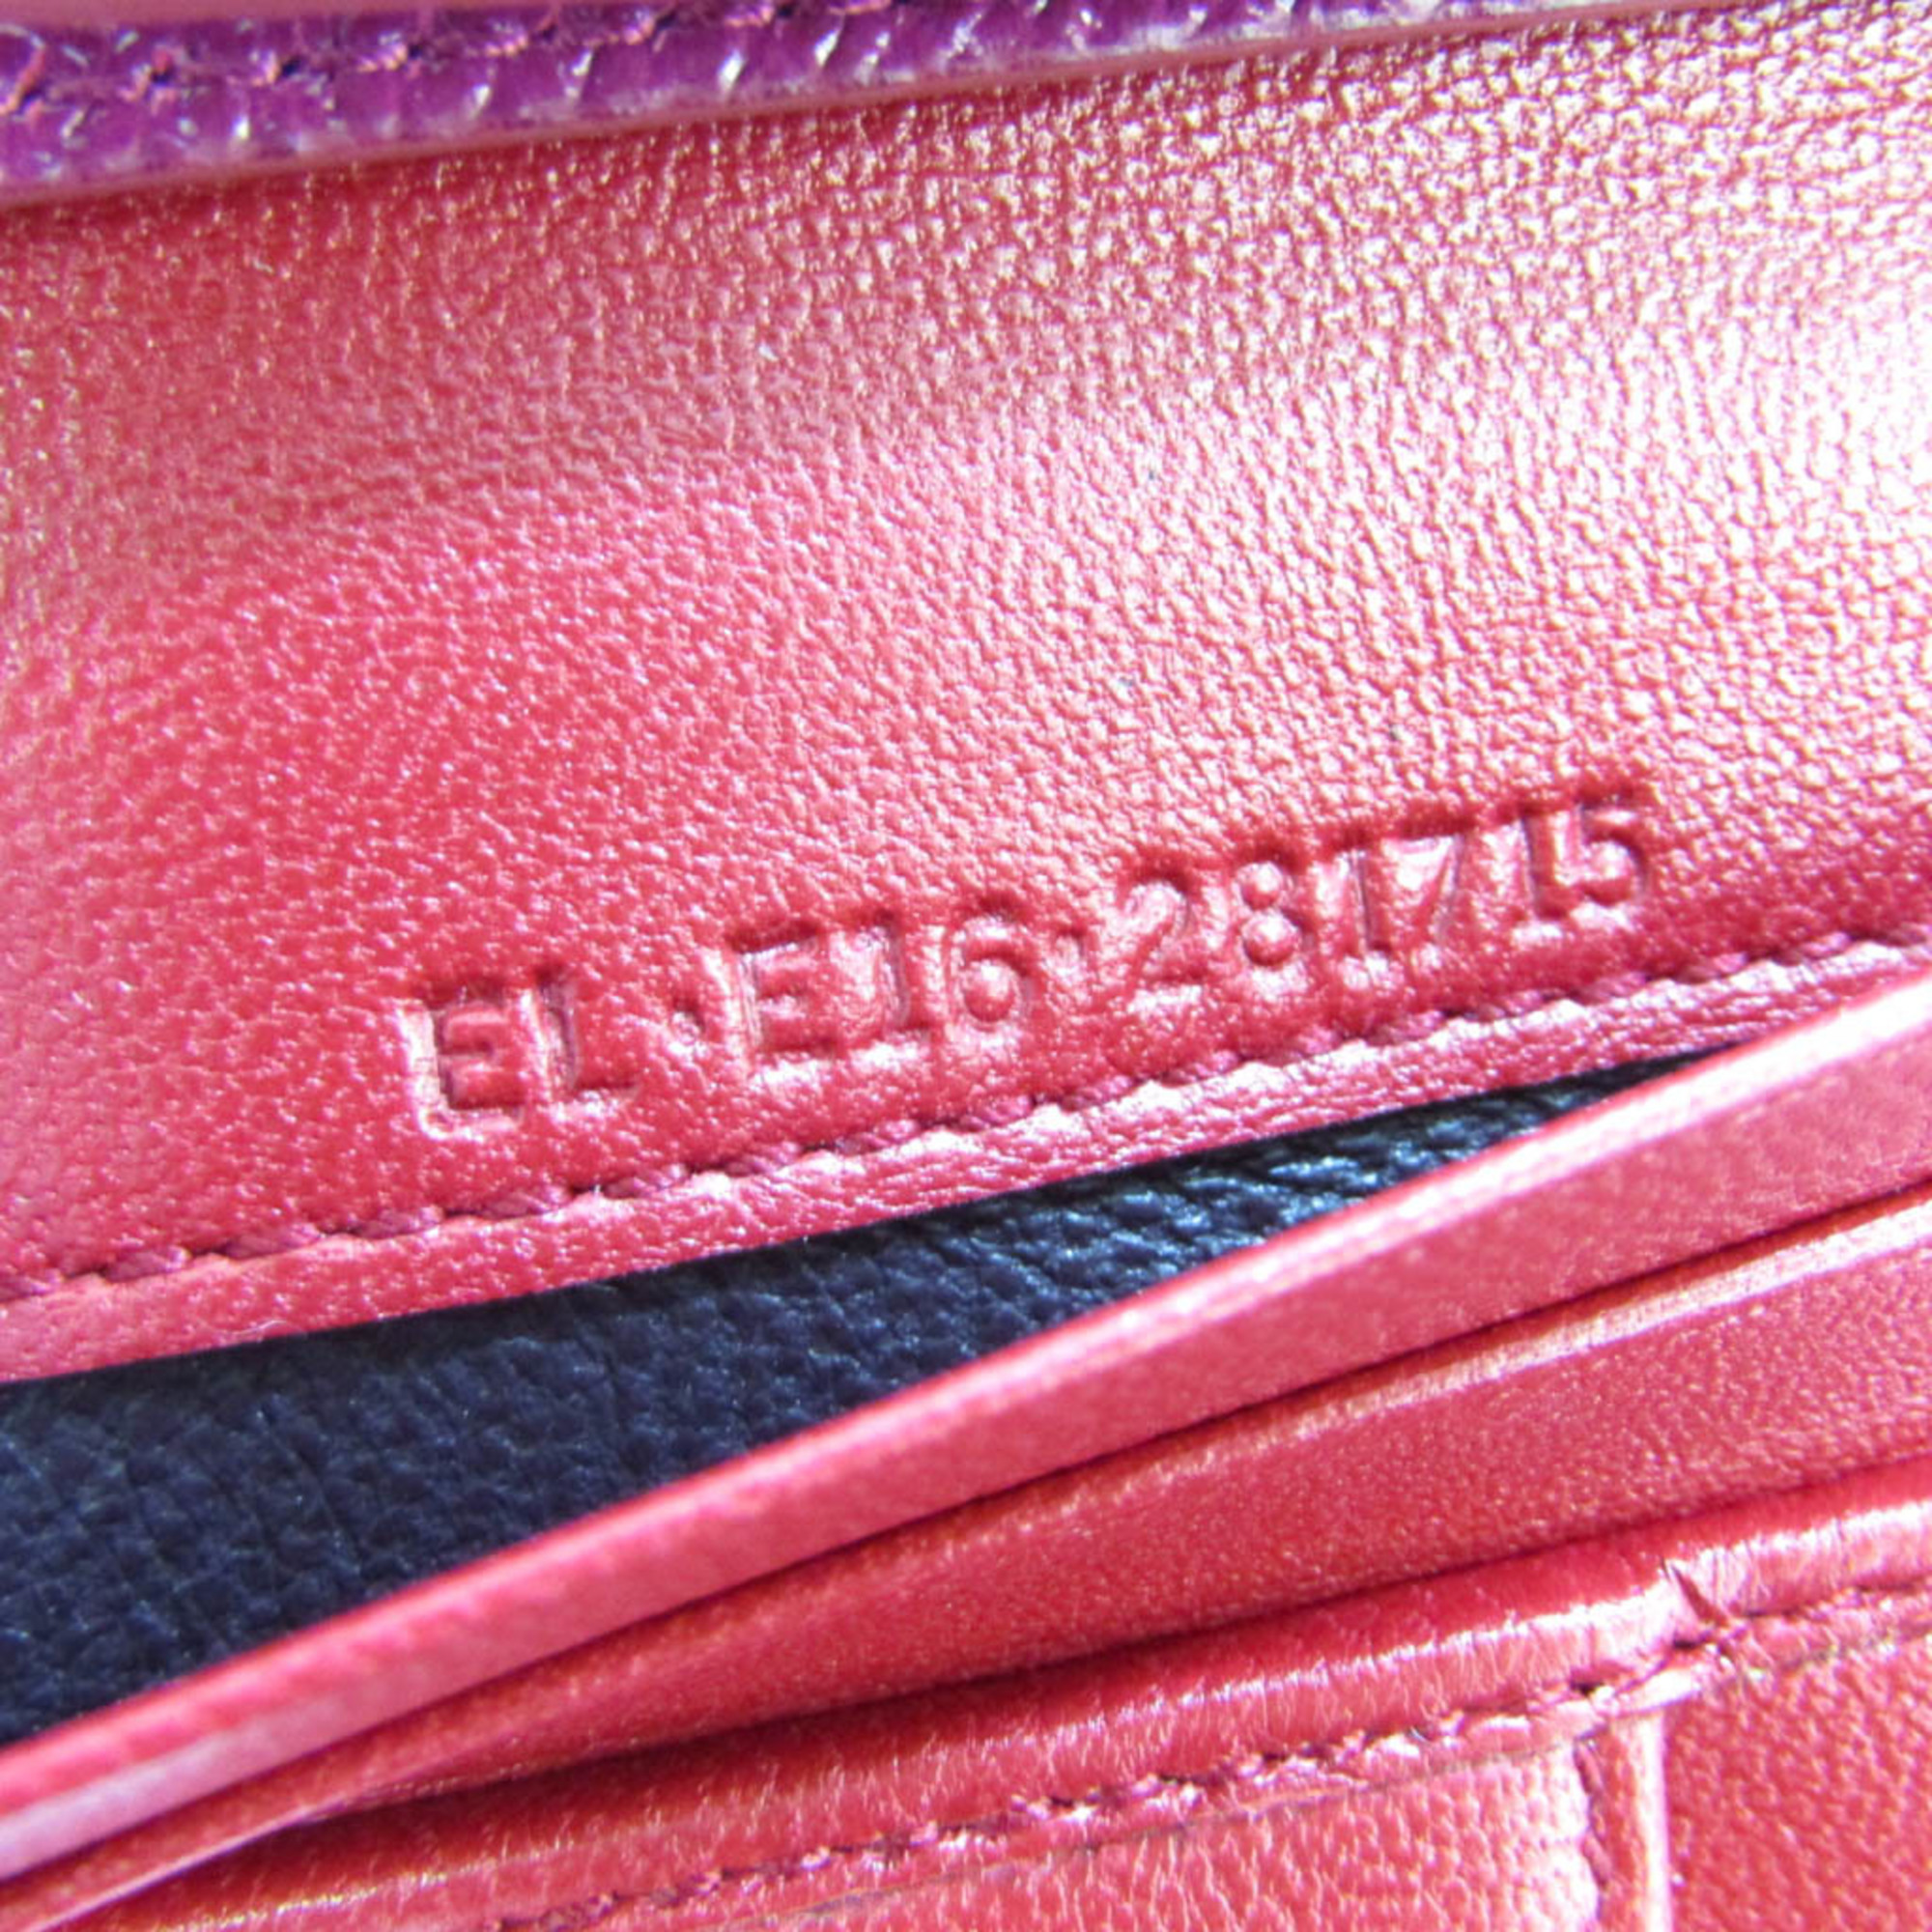 Bvlgari Bvlgari Bvlgari 281715 Women's Leather Phone Wallet Purple,Red Color